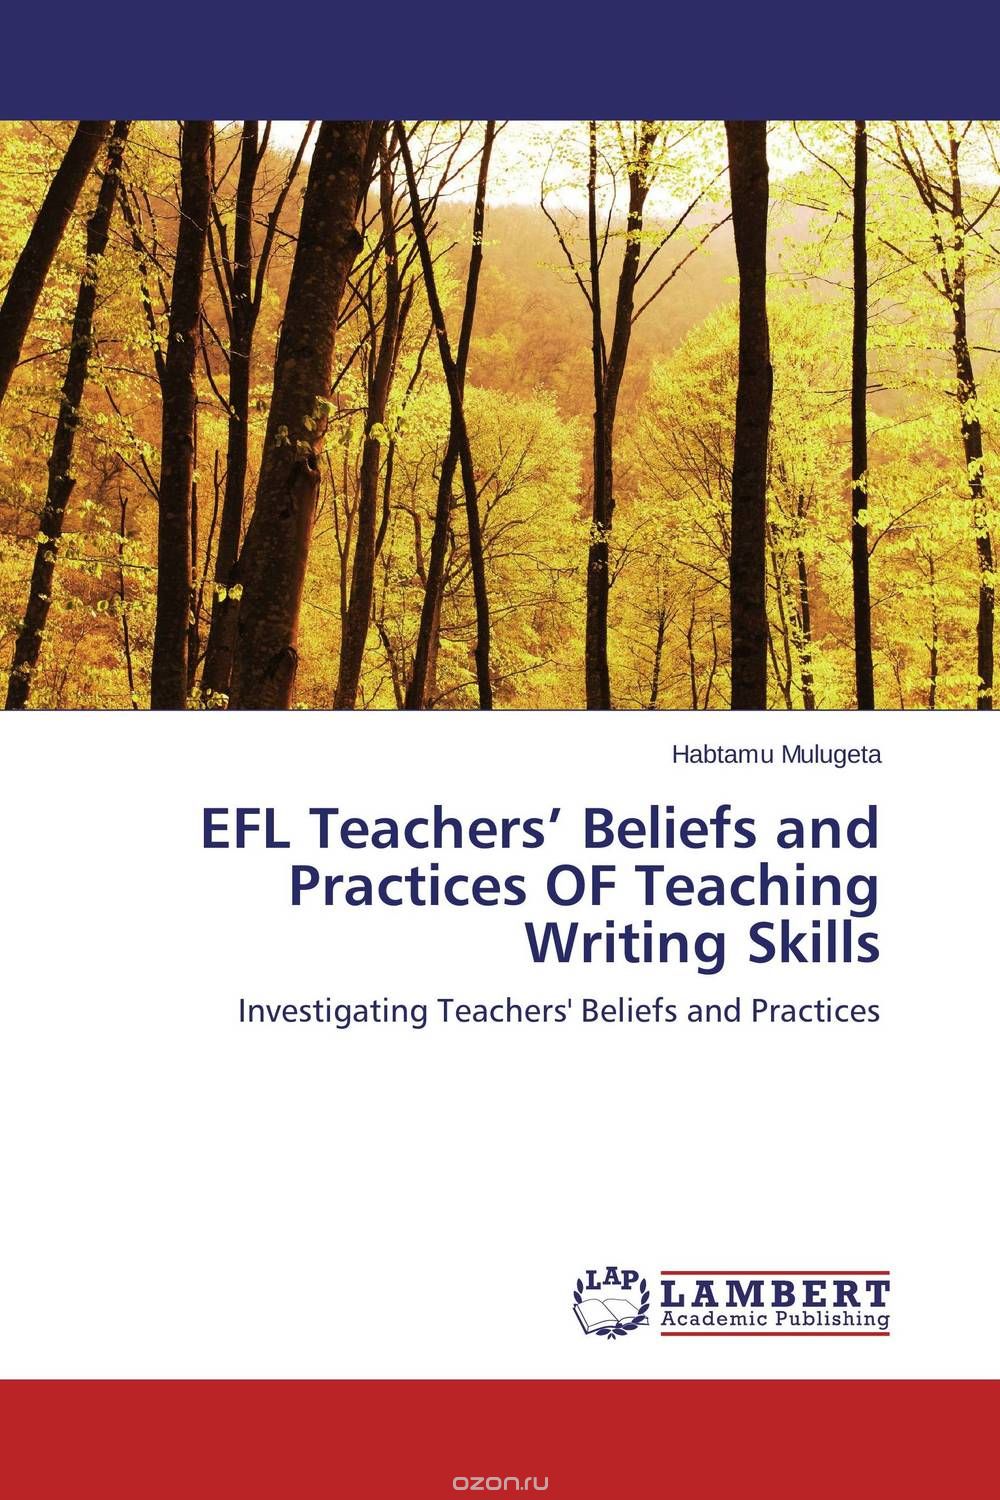 EFL Teachers’ Beliefs and Practices OF Teaching Writing Skills